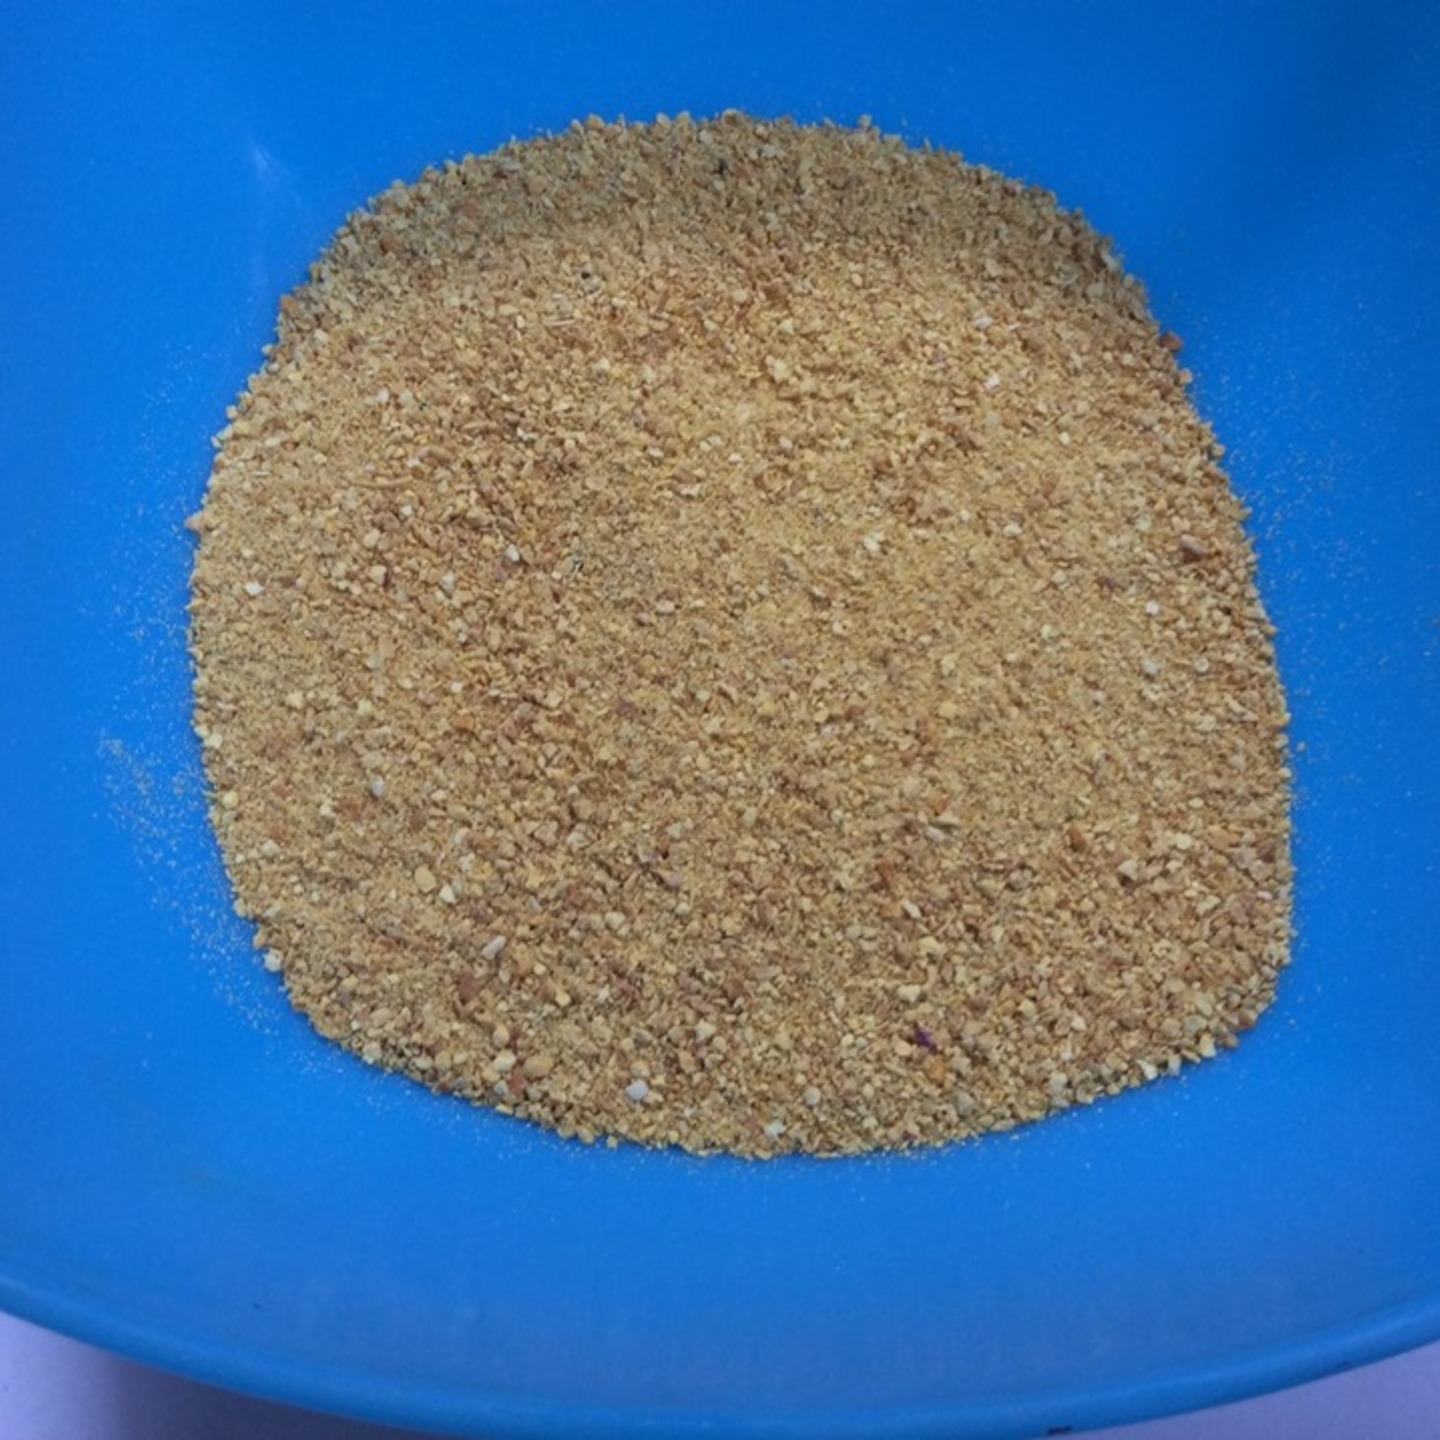 drumsticks Moringa flowers powder - 1 pack-25 grams